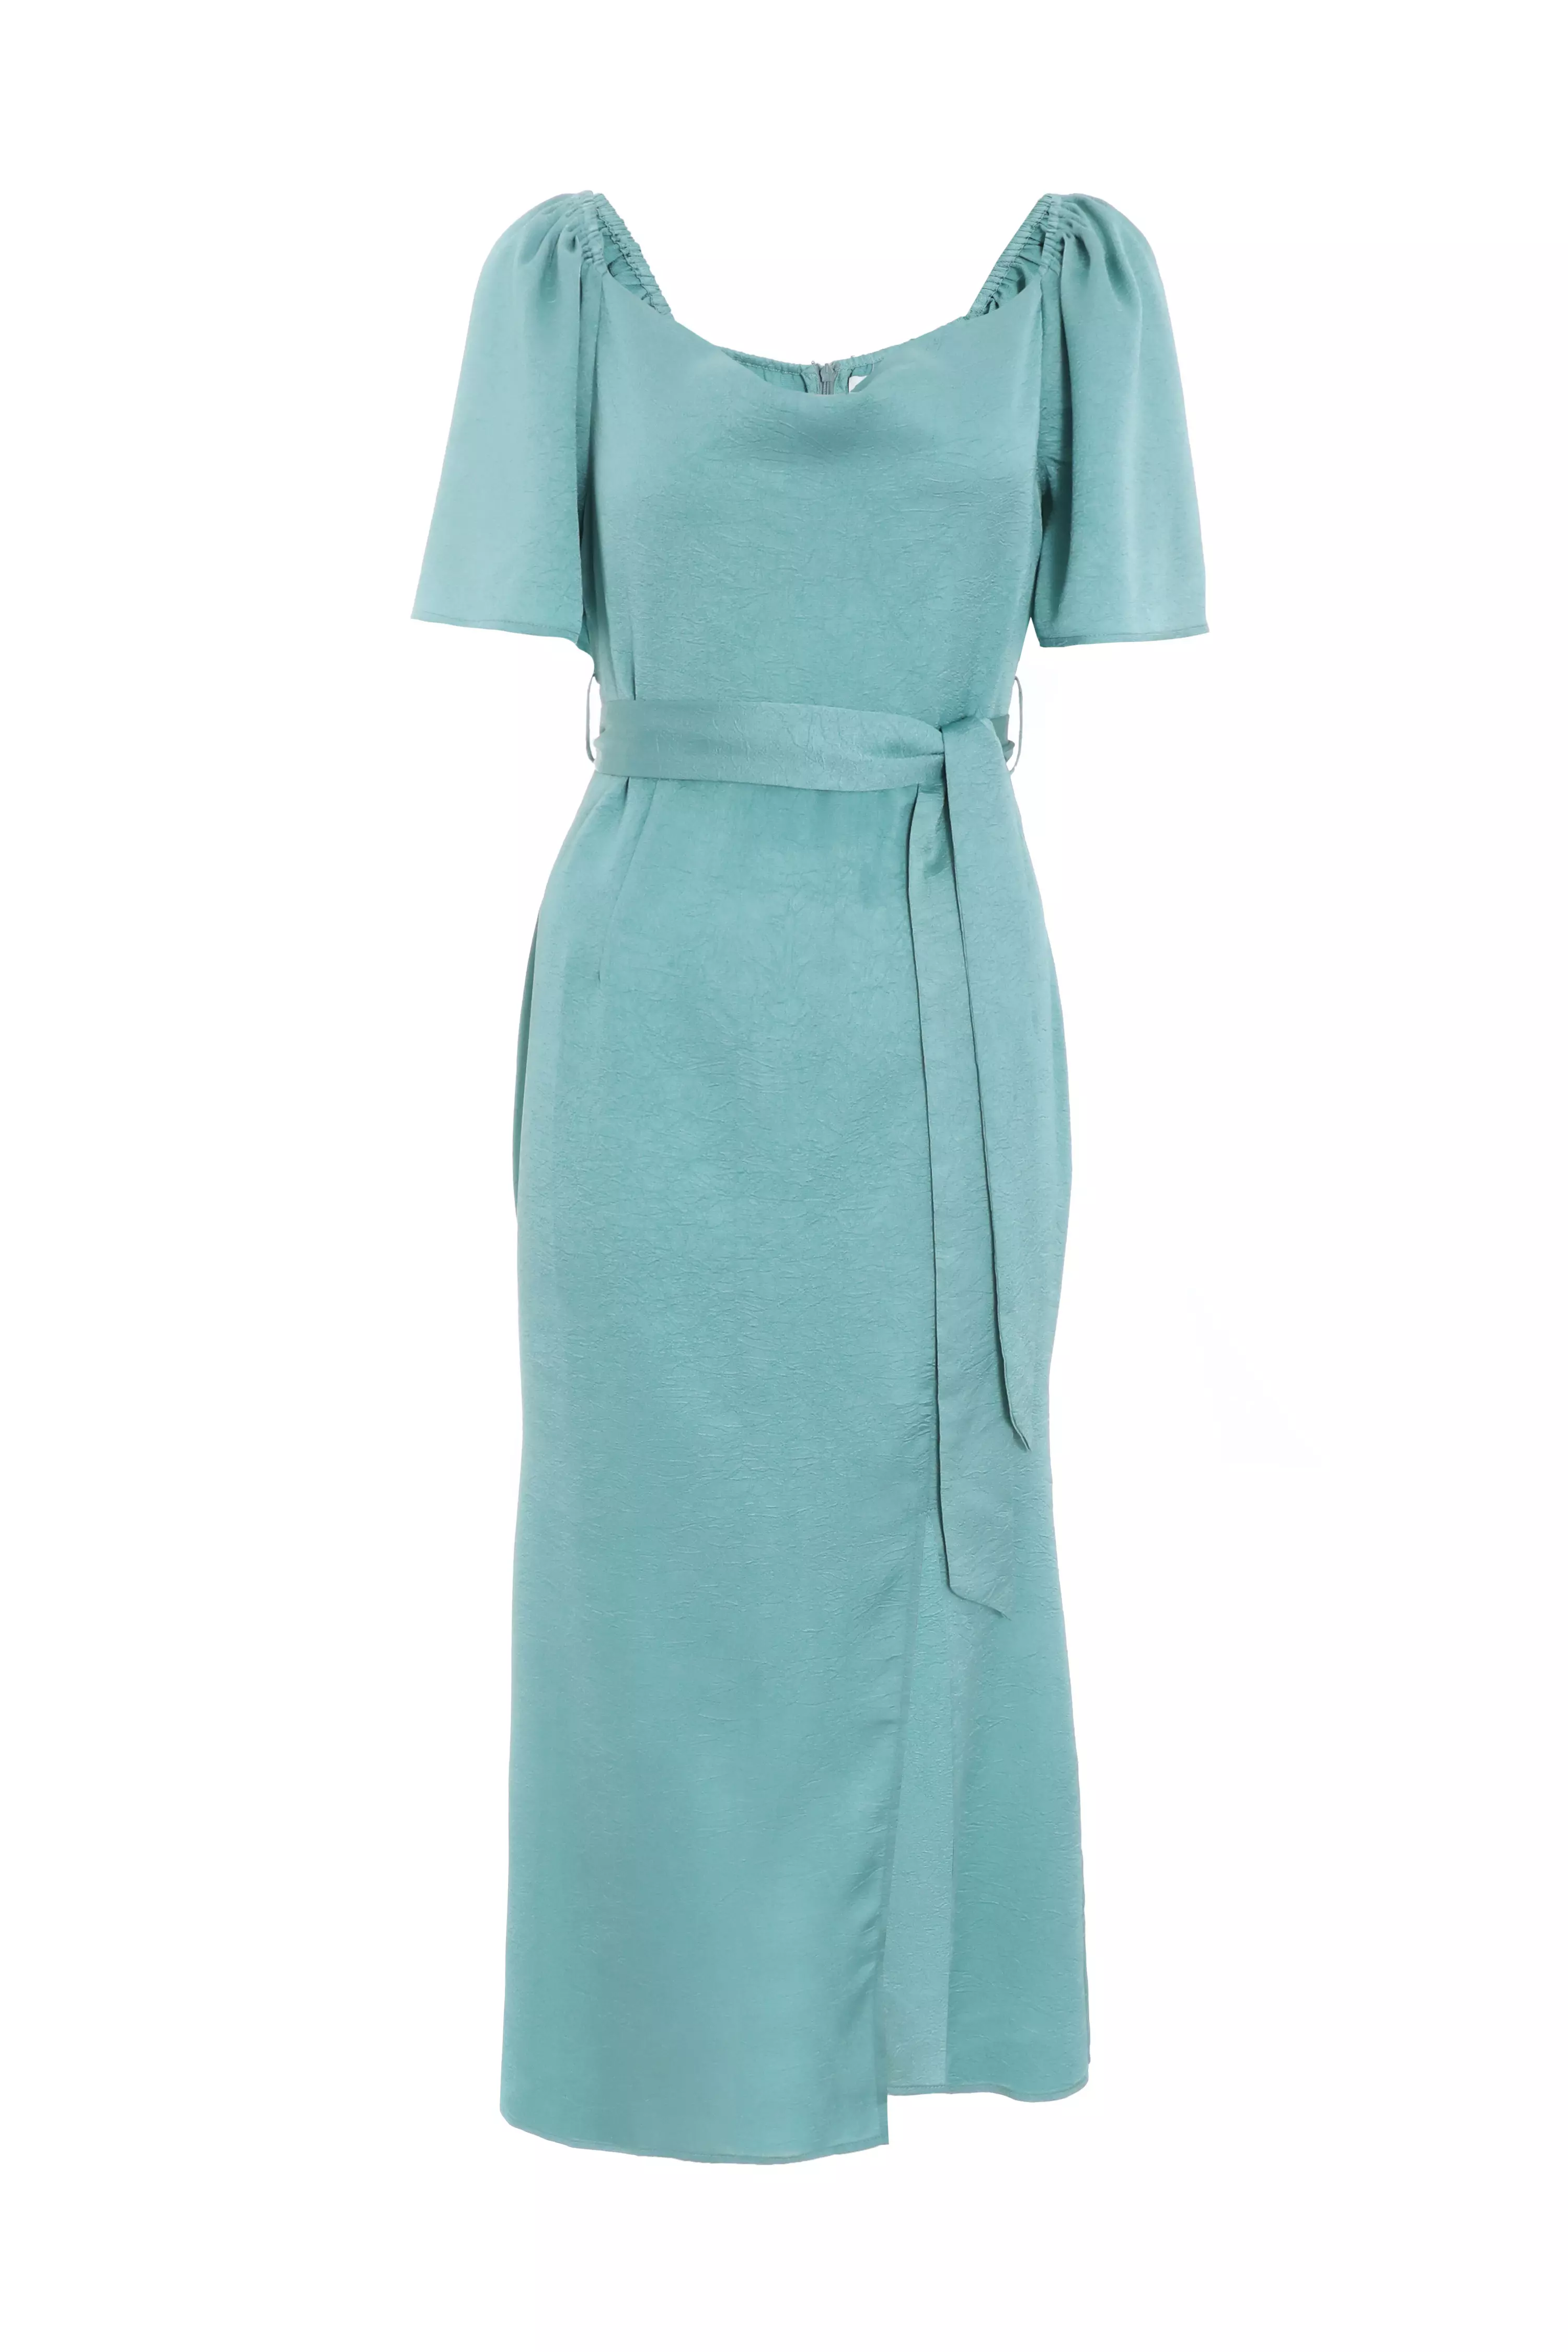 Blue Cowl Neck Midi Dress - QUIZ Clothing